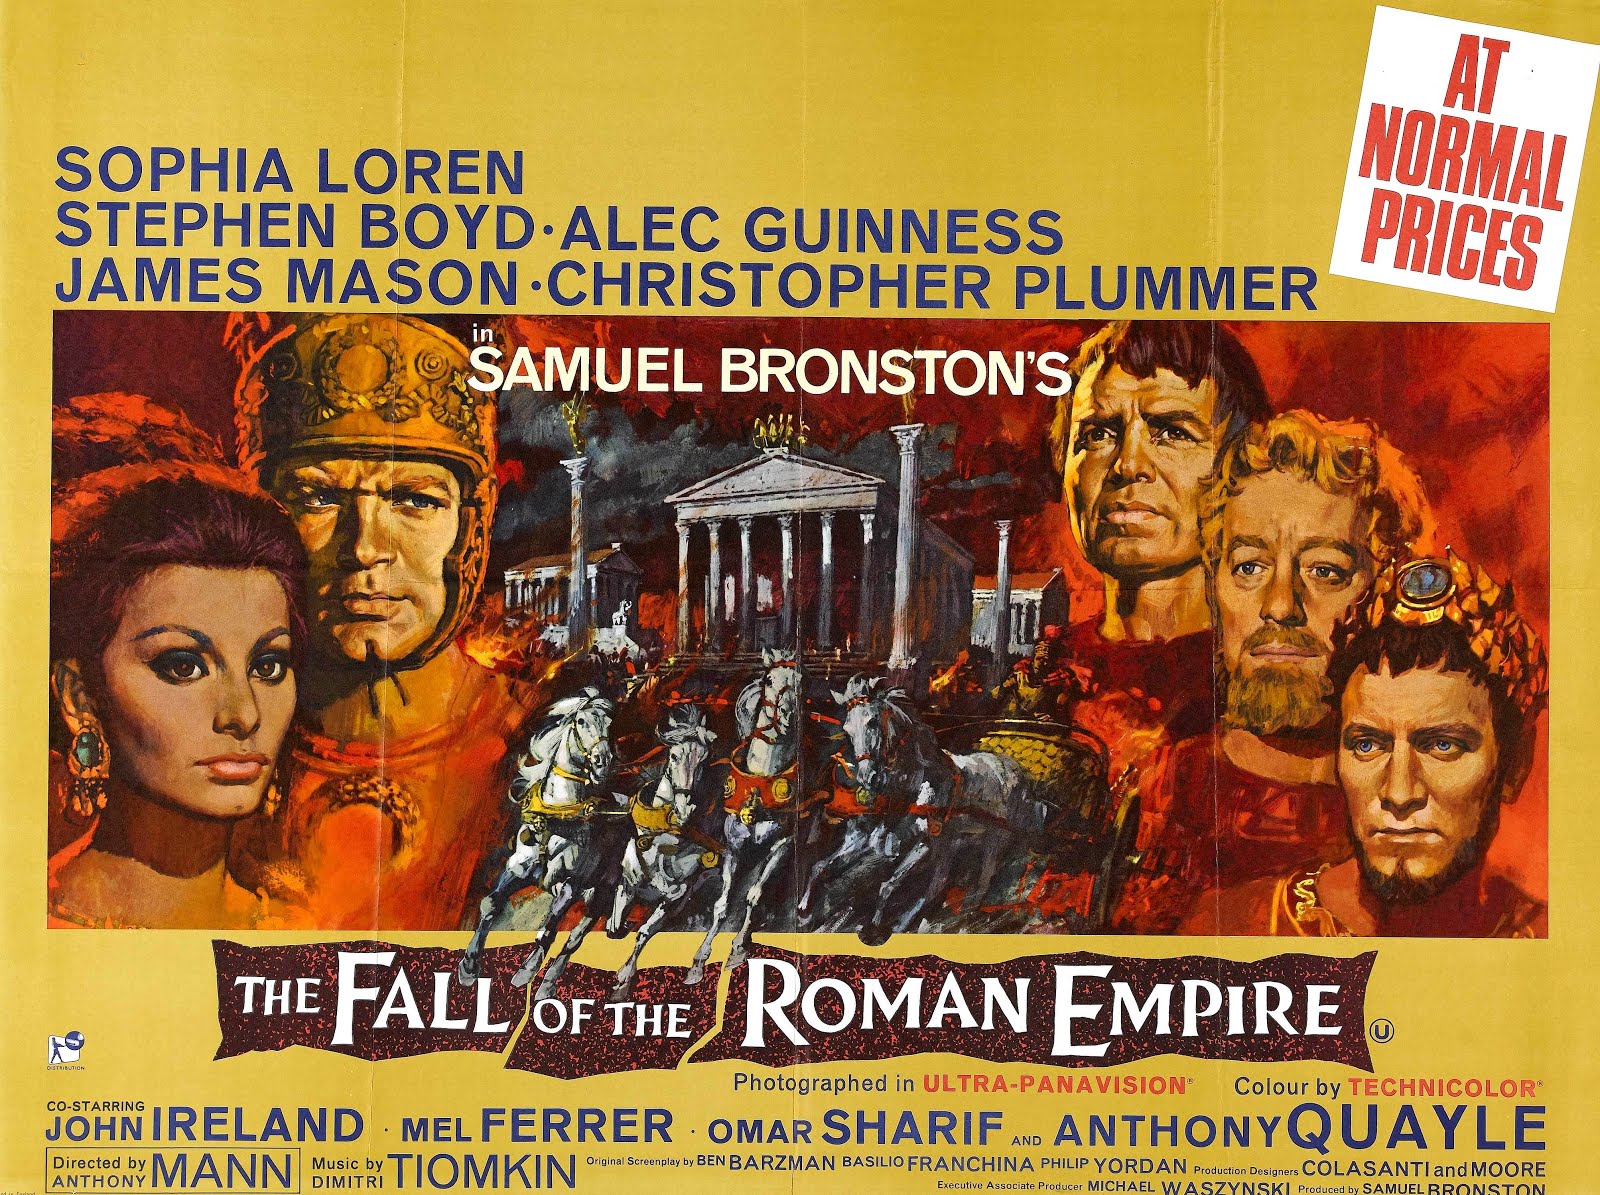 La chute de l'empire Romain (1963) Anthony Mann - The fall of the Roman empire (10.1962 / 04.1963)